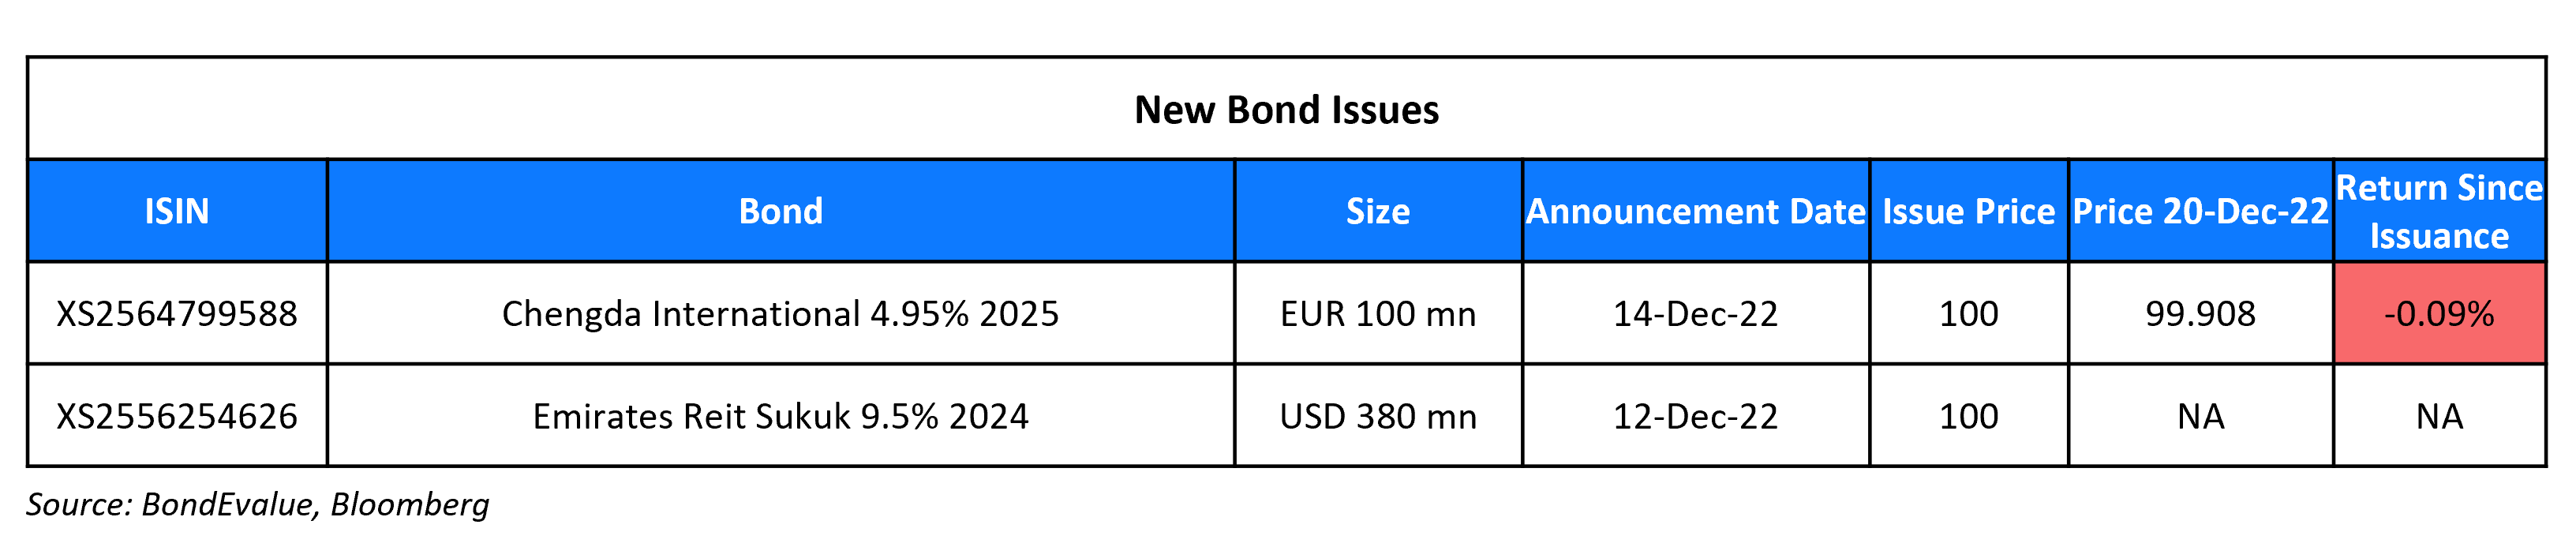 New Bond Issues 20 Dec 22